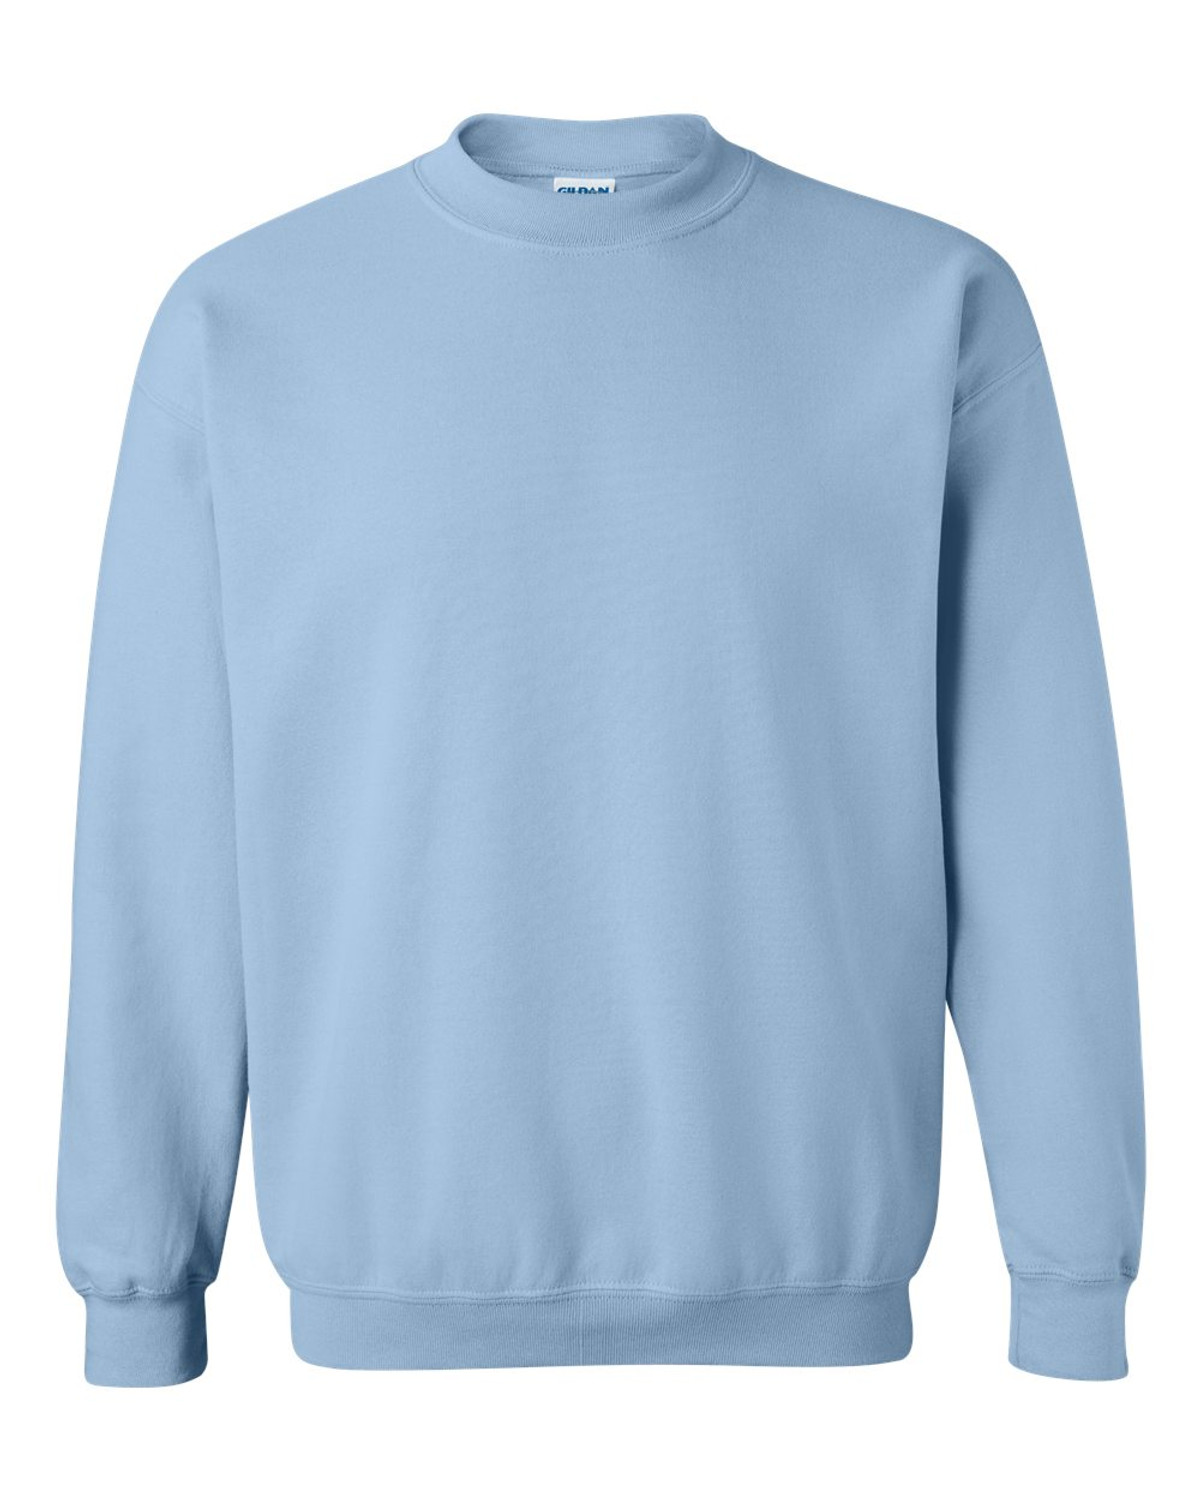 Gildan Men's Fleece Crewneck Sweatshirt, Style G18000, Dark Heather, Small